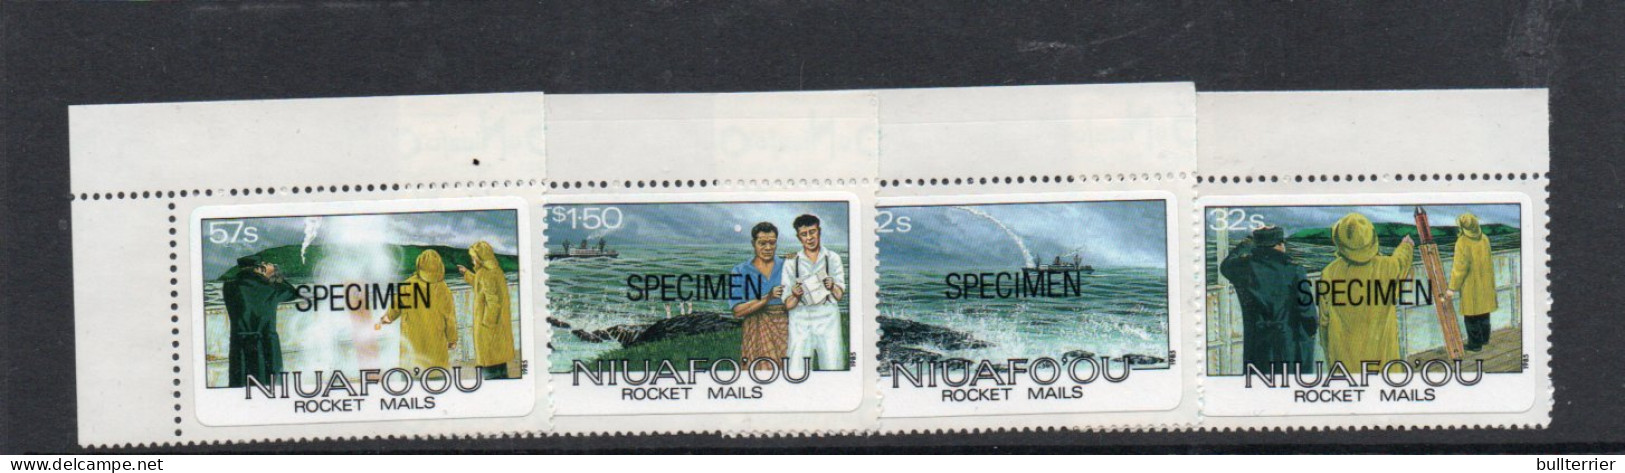 NIUAFOOU - 1985 - ROCKET MAILS SET OF 4   " SPECIMENS"  MINT NEVER HINGED  - Oceania (Other)